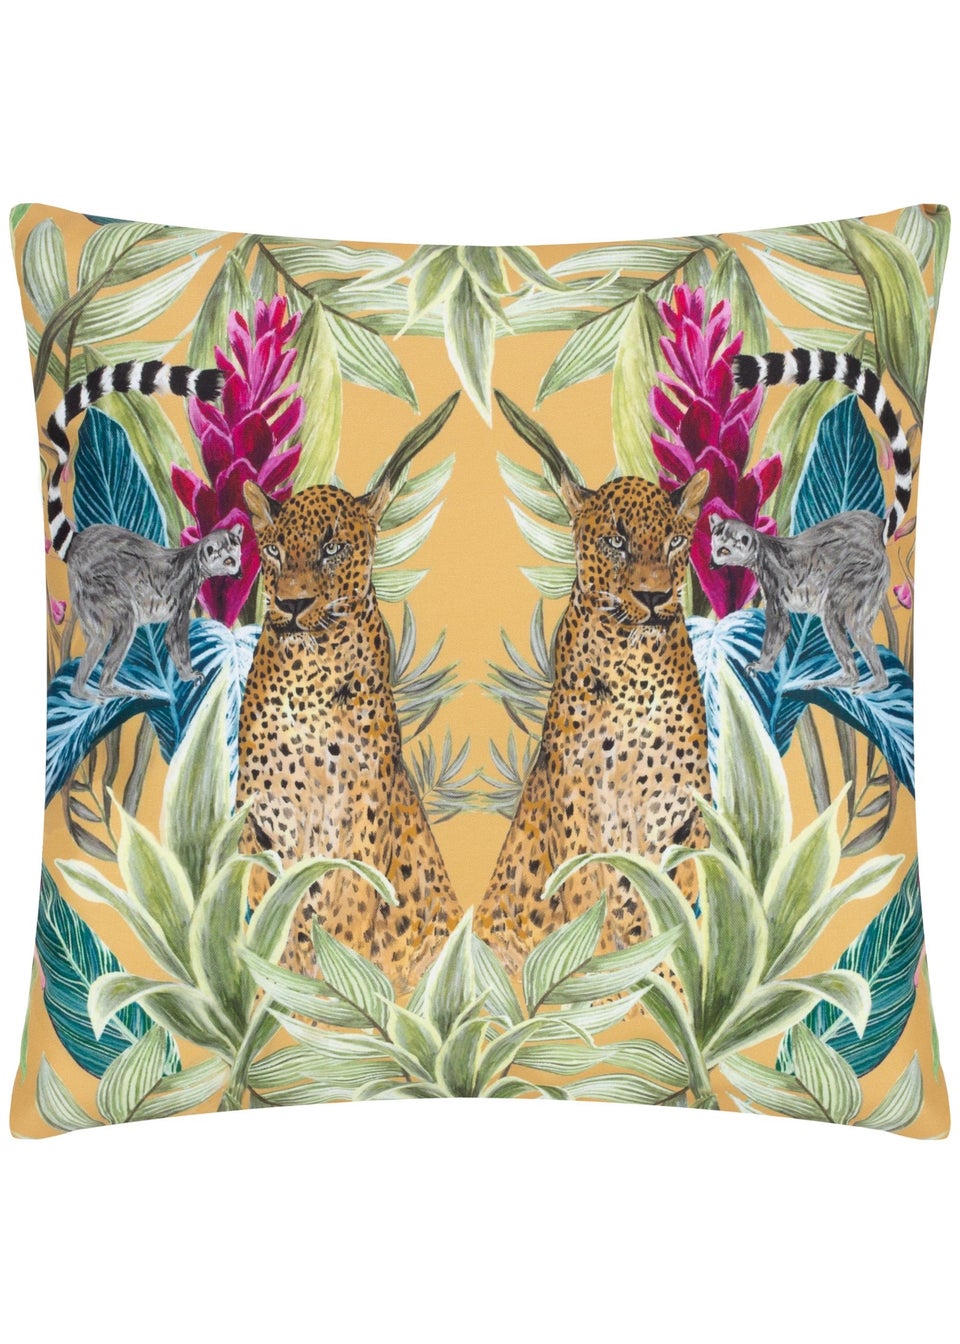 Wylder Tropics Multi Kali Leopard Filled Outdoor Cushions (43cm x 43cm x 8cm)